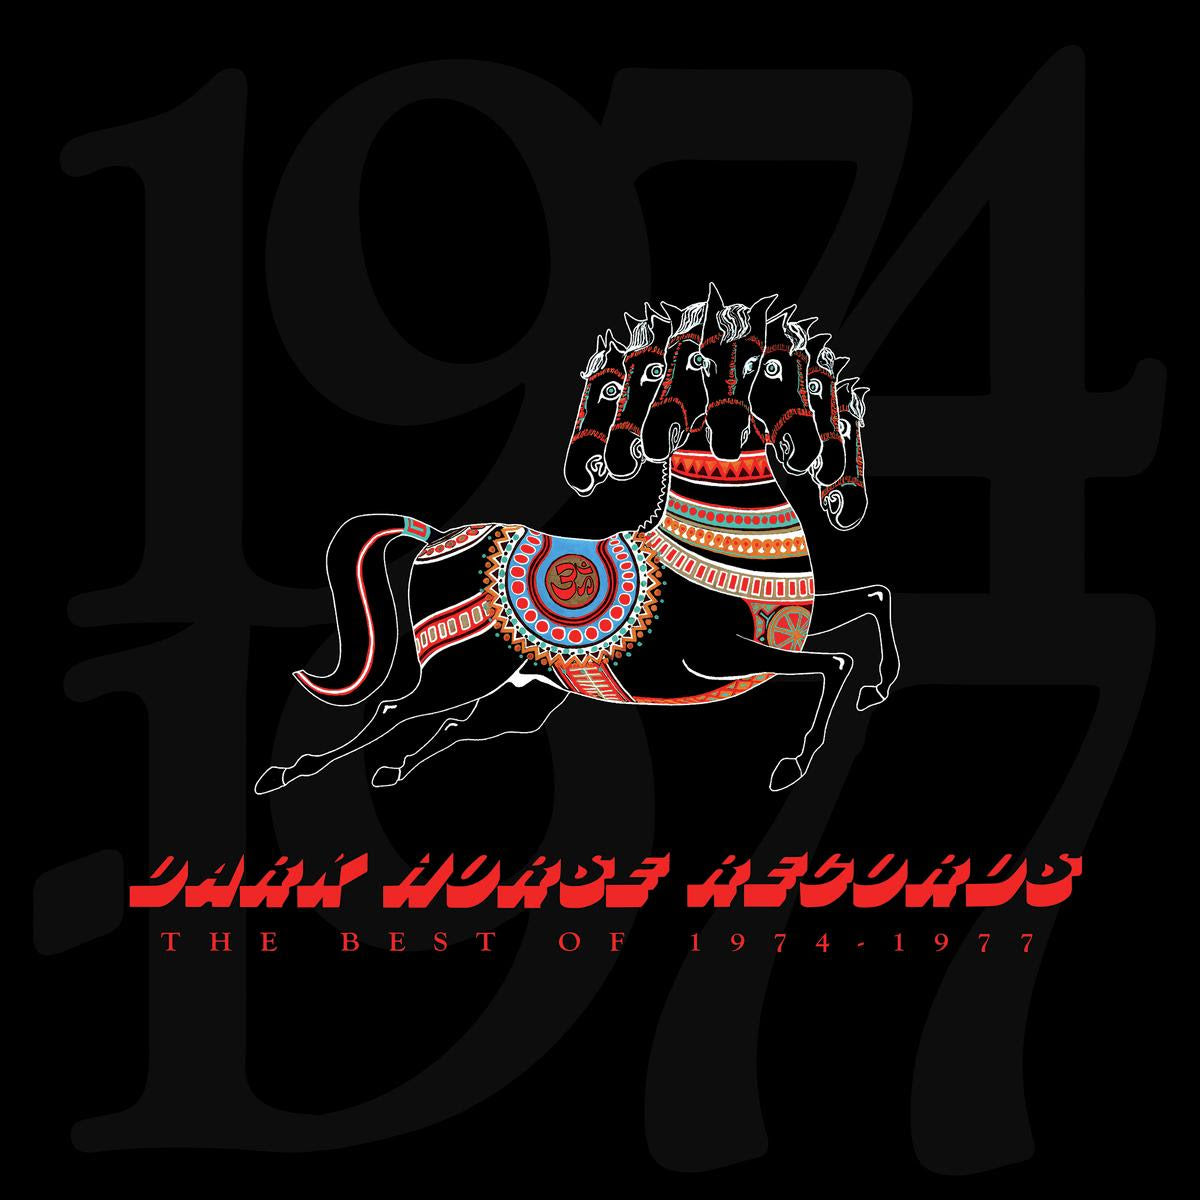 VA - The Best of Dark Horse Records | Buy the Vinyl LP from Flying Nun Records